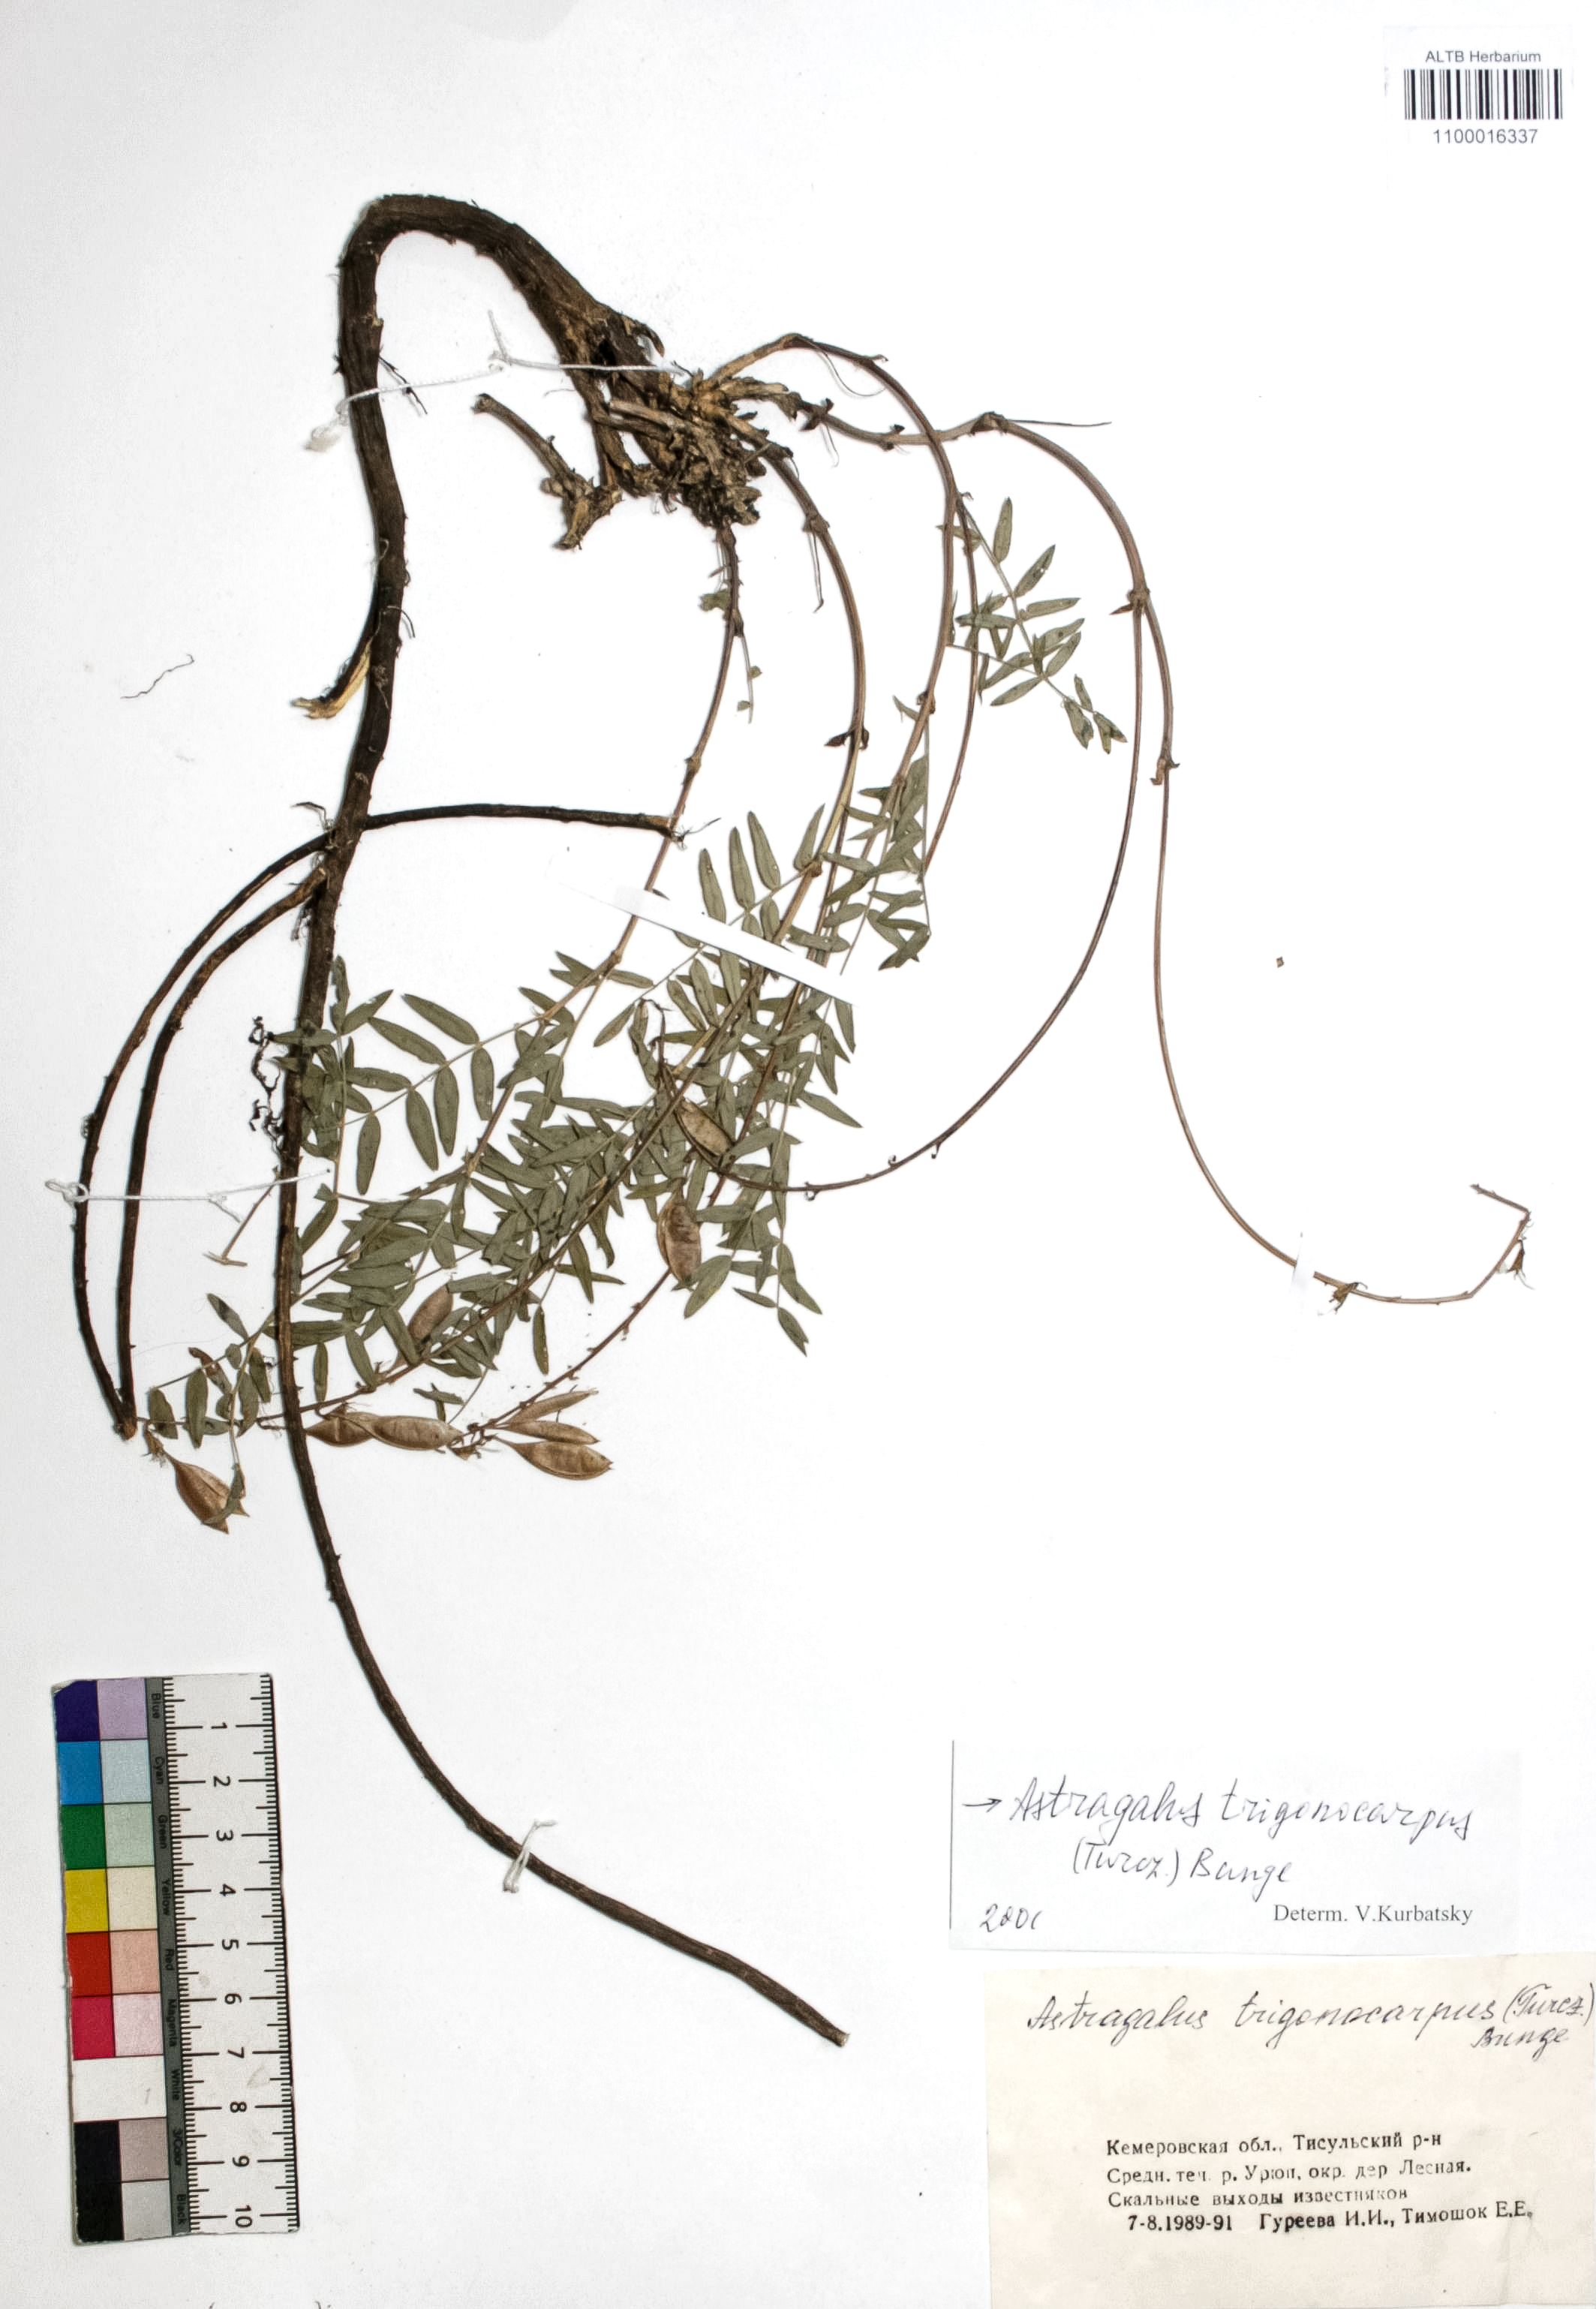 Astragalus trigonocarpus (Turcz.) Bunge